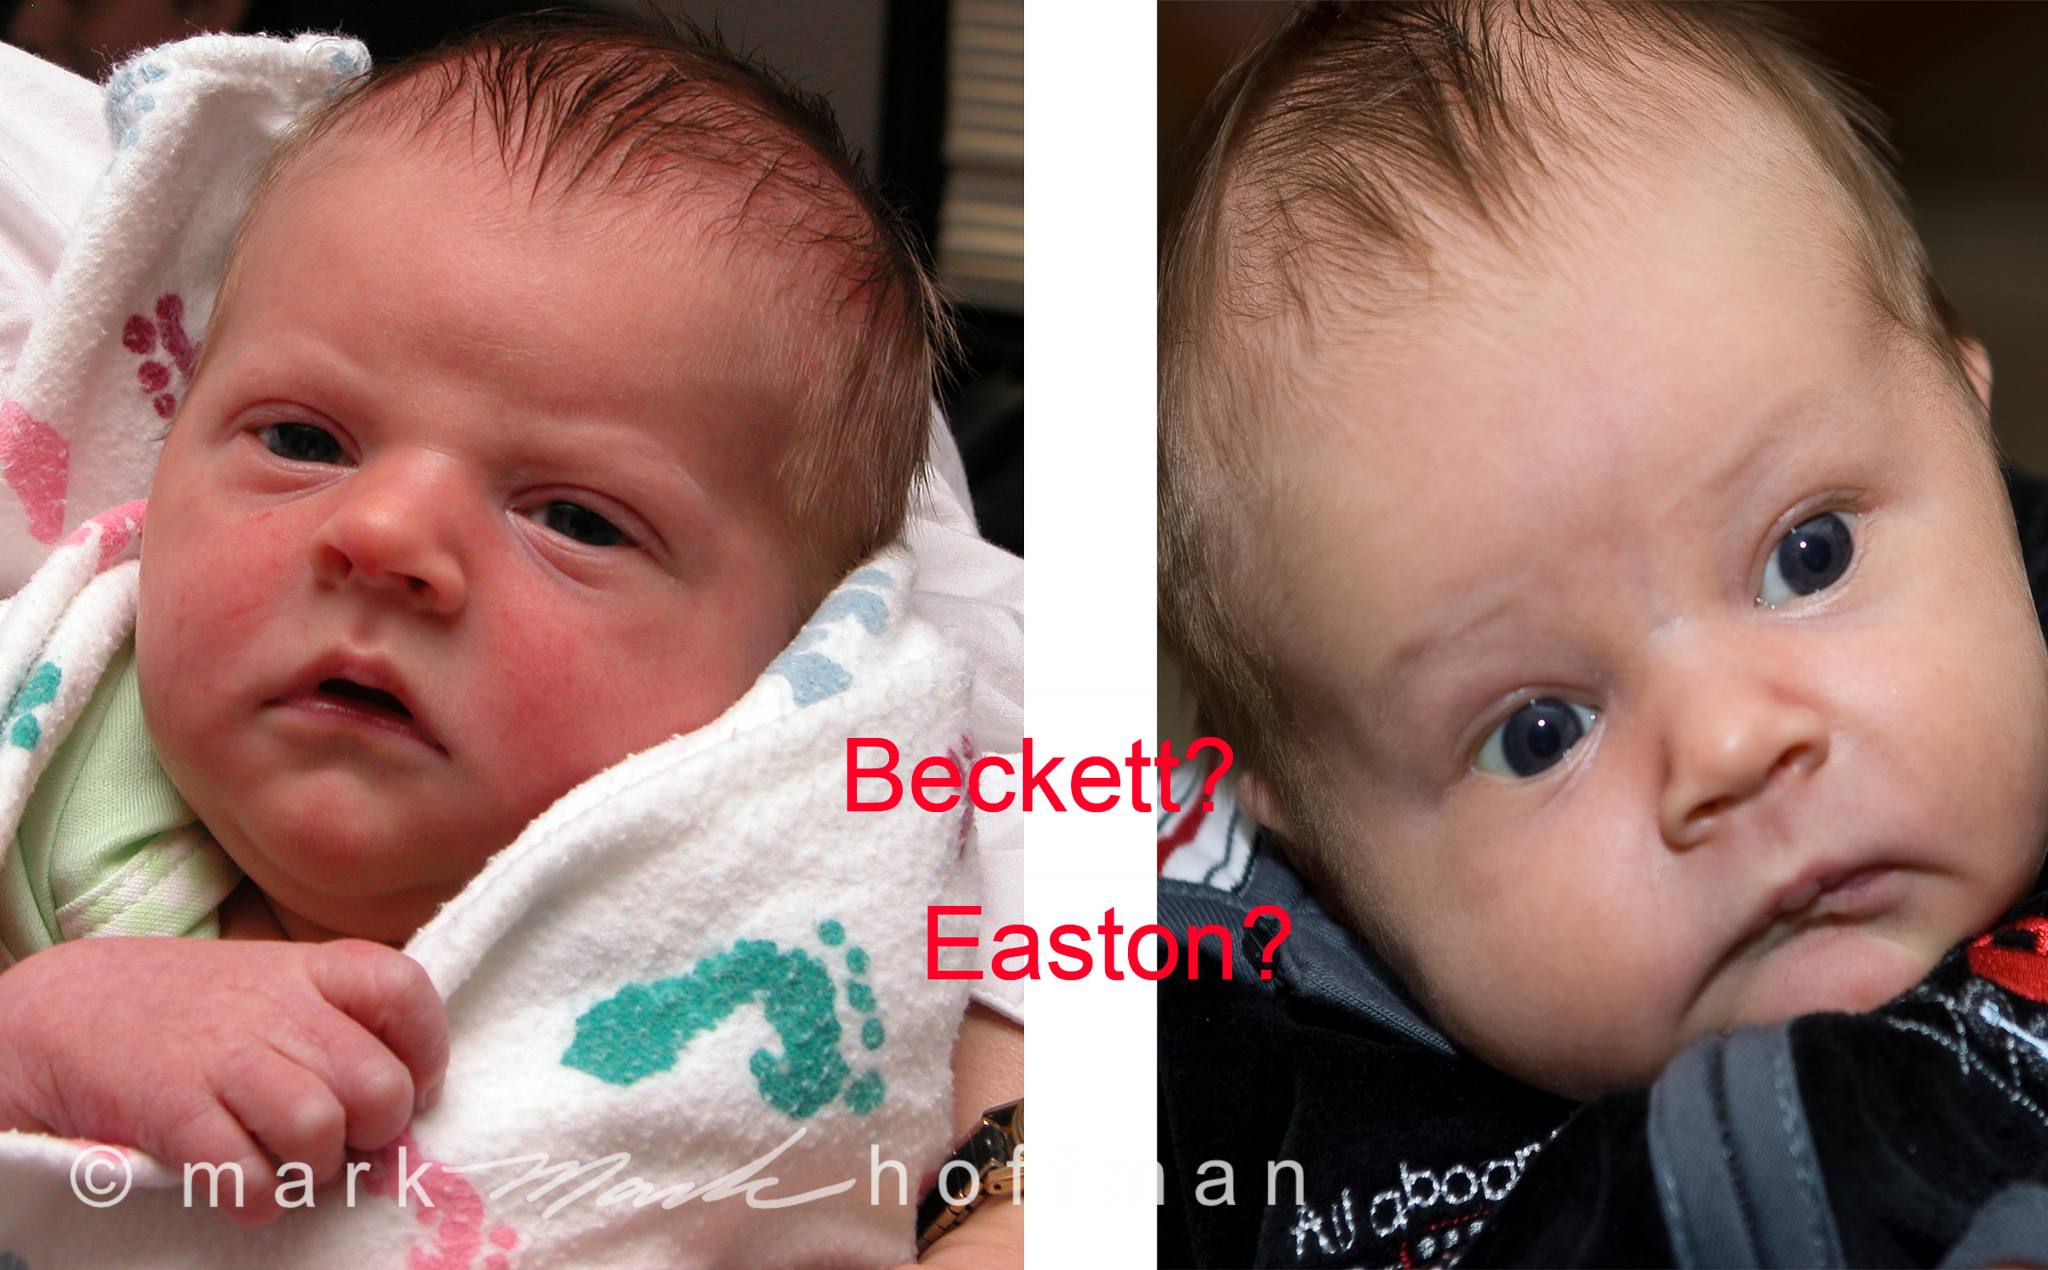 Beckett_Easton_cap1_var1.jpg